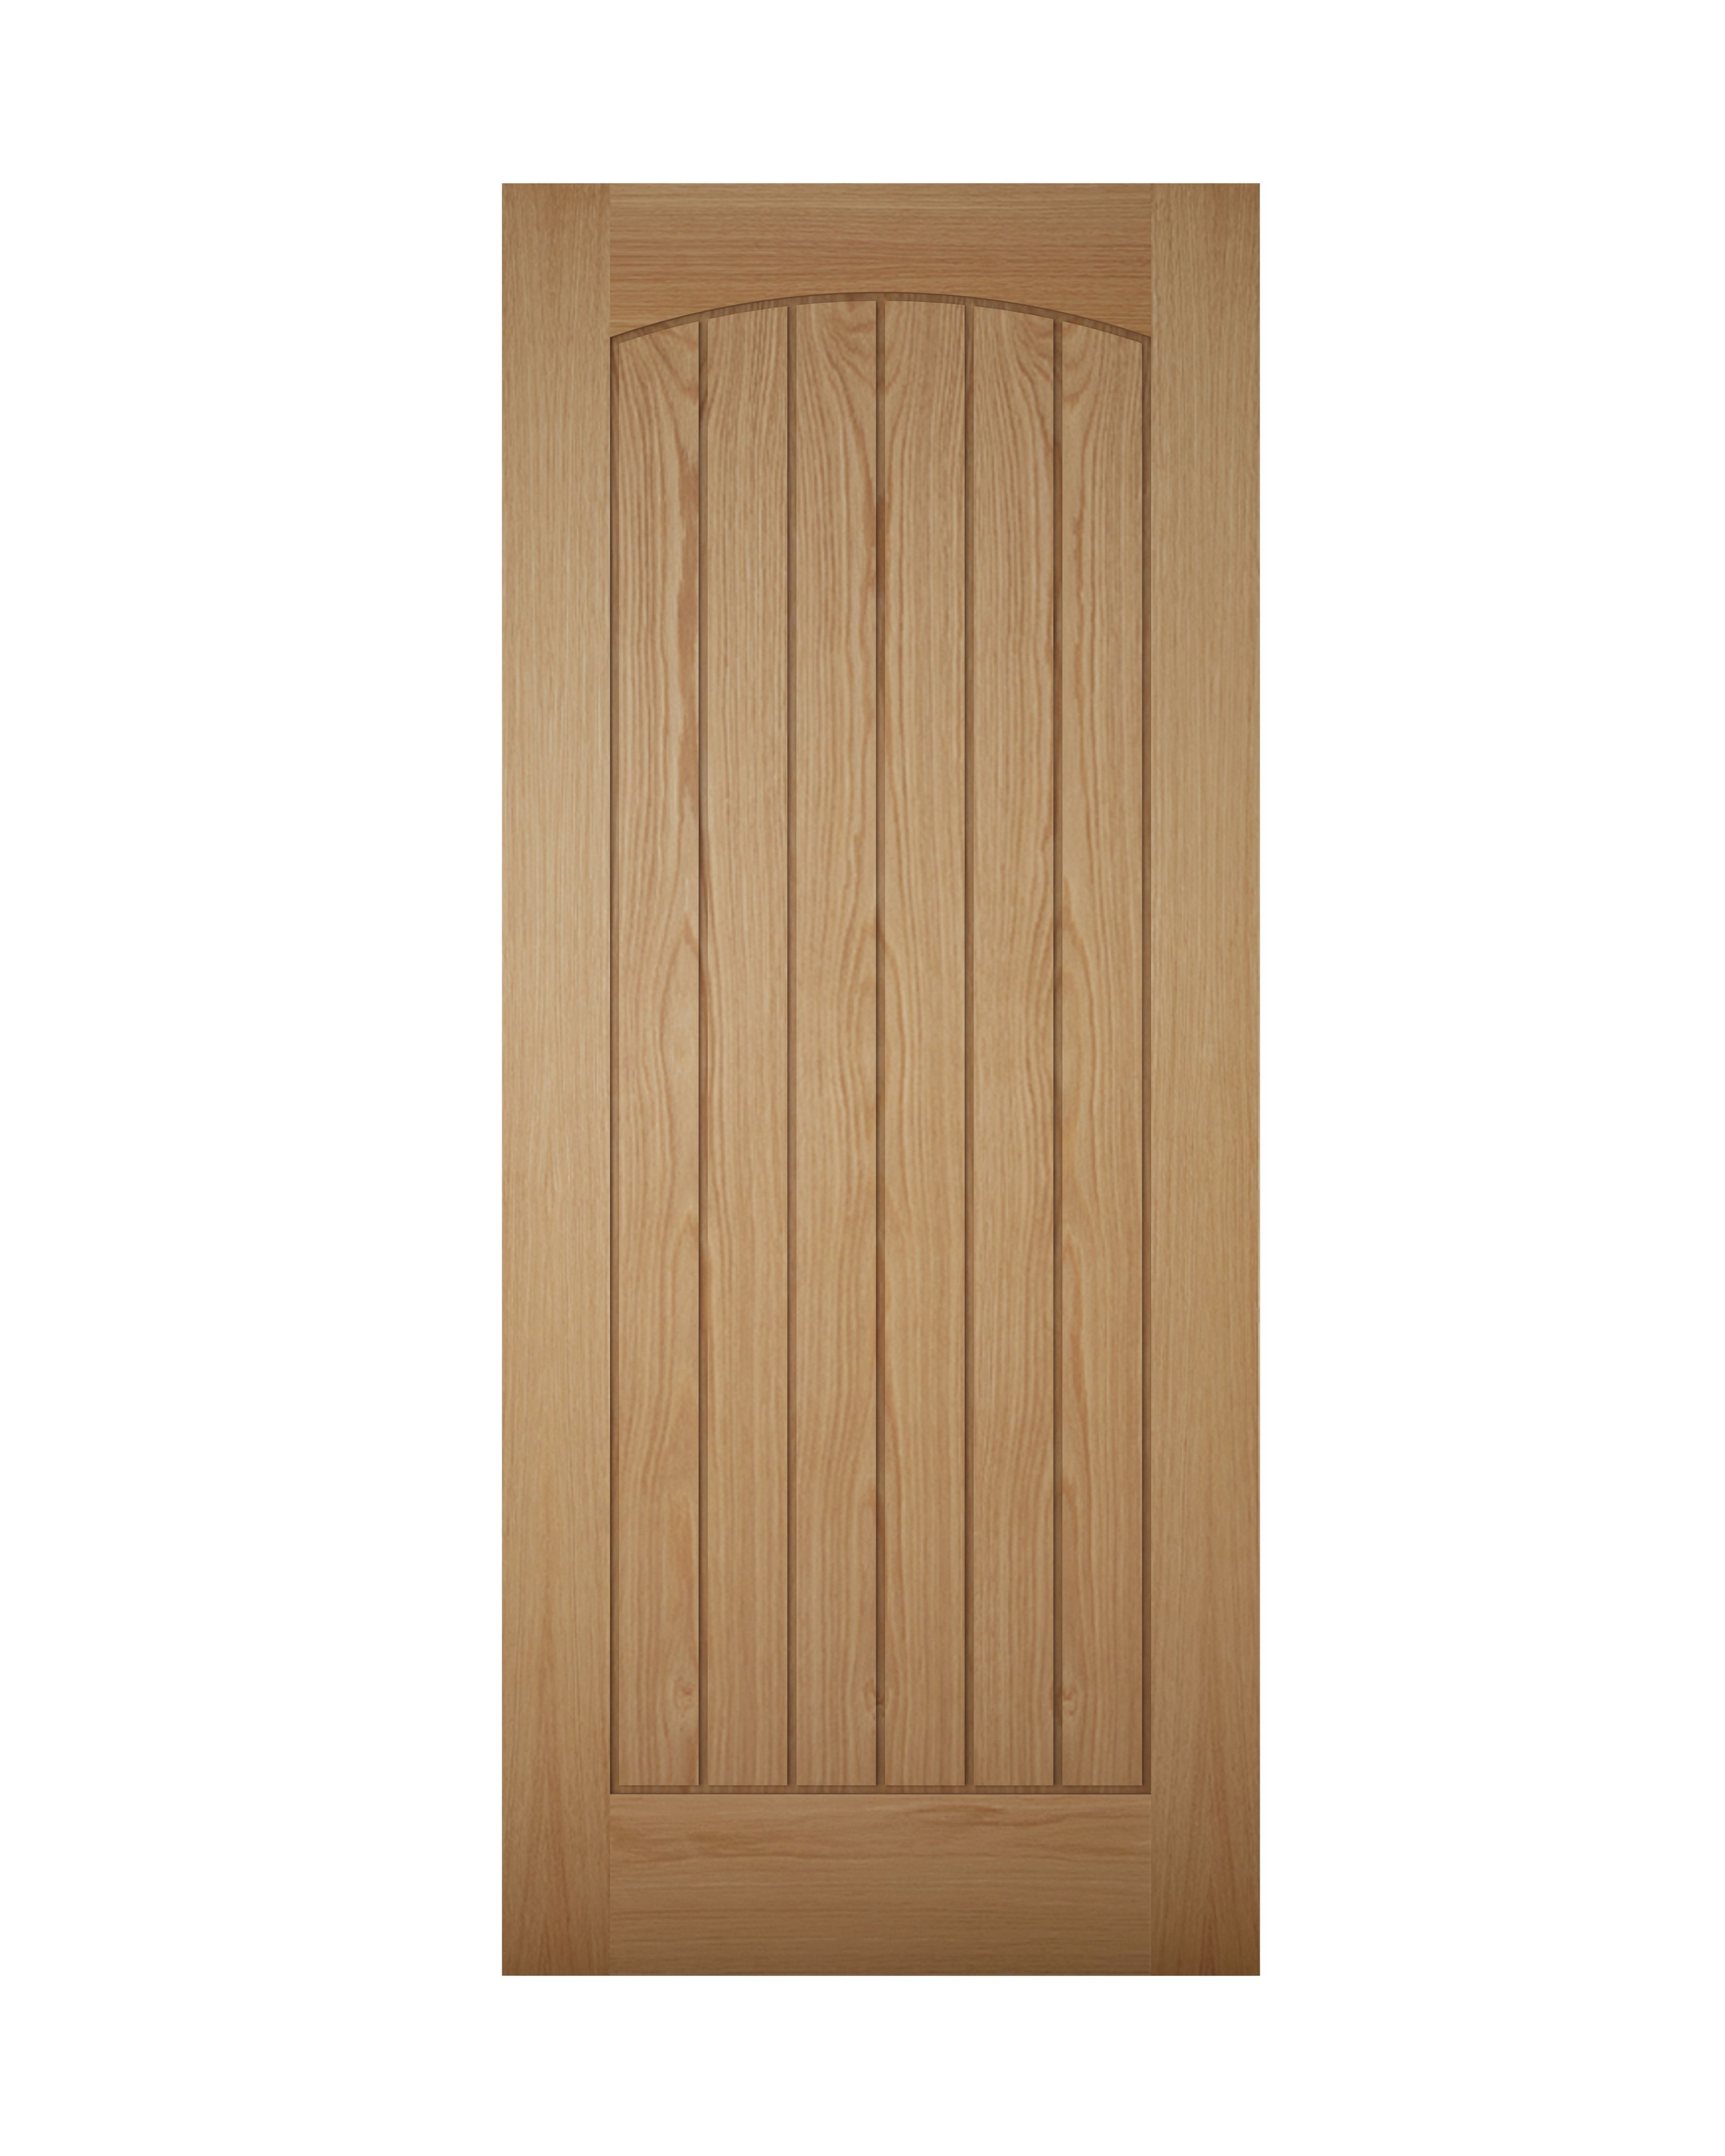 Geom Unglazed Cottage Wooden White oak veneer External Front door, (H)1981mm (W)762mm